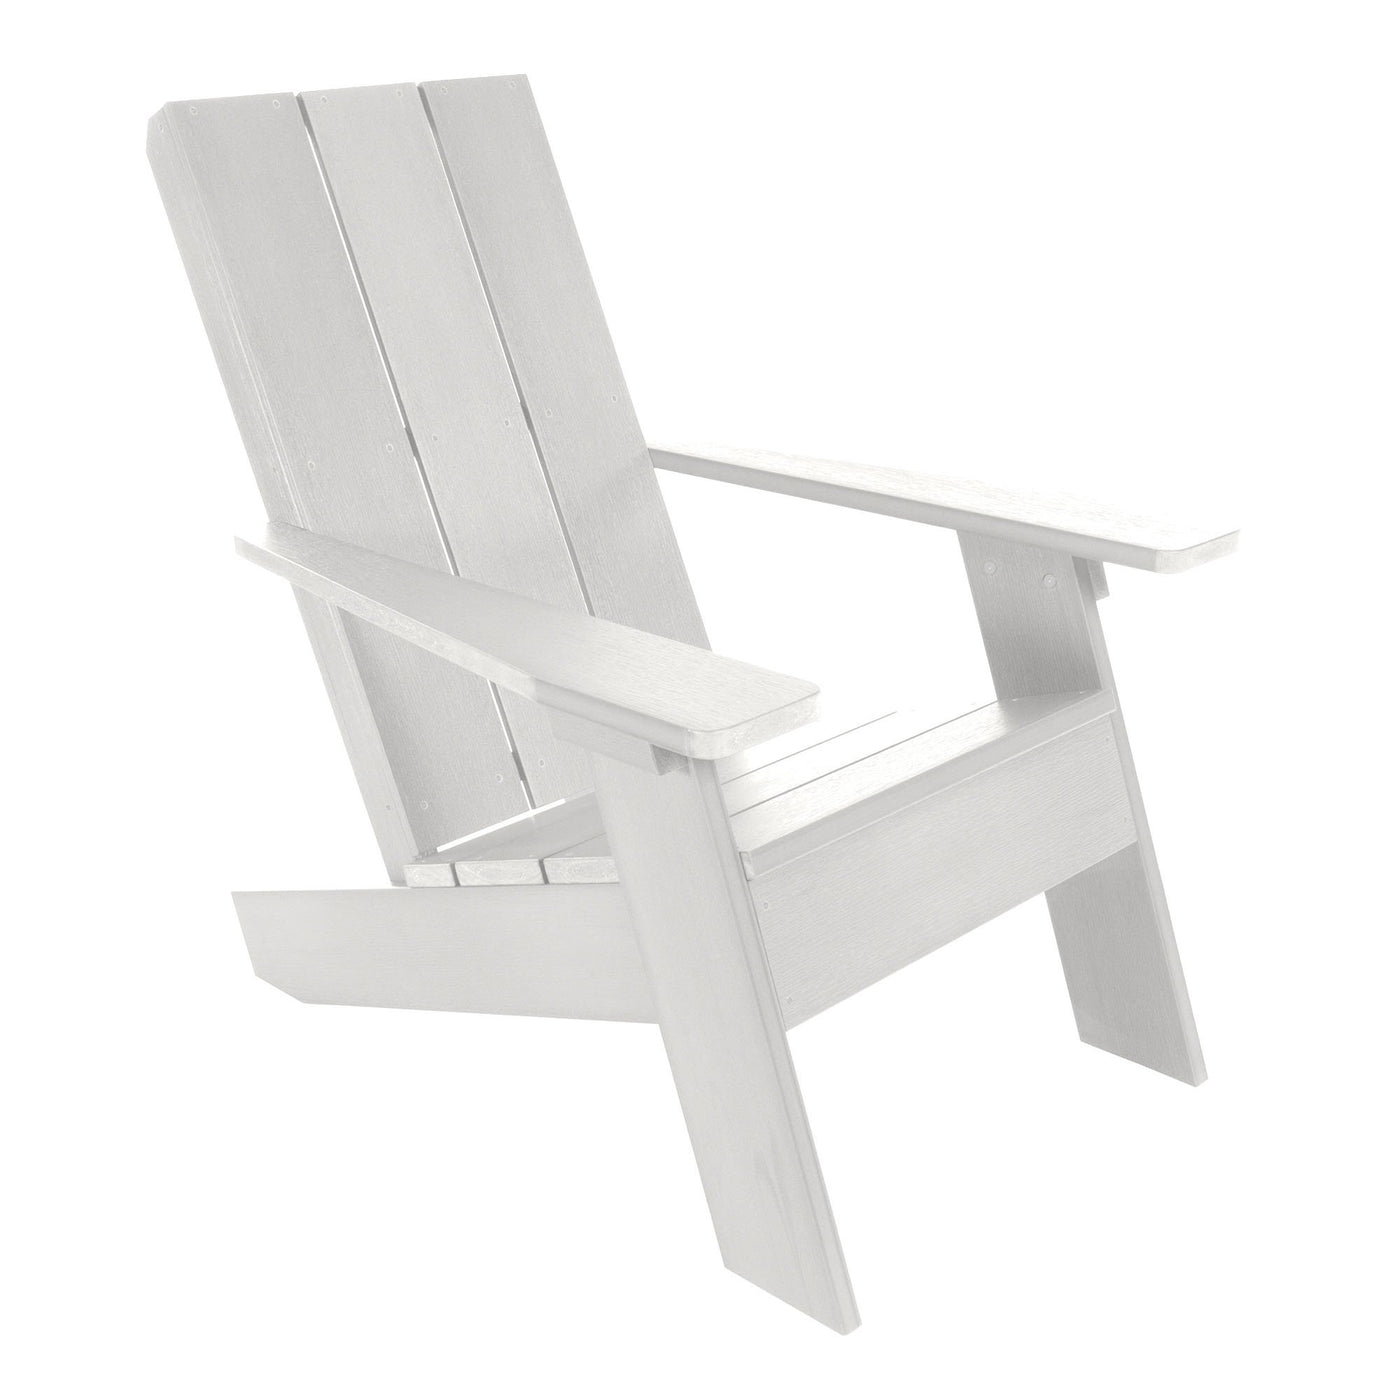 Italica Modern Adirondack chair in White 